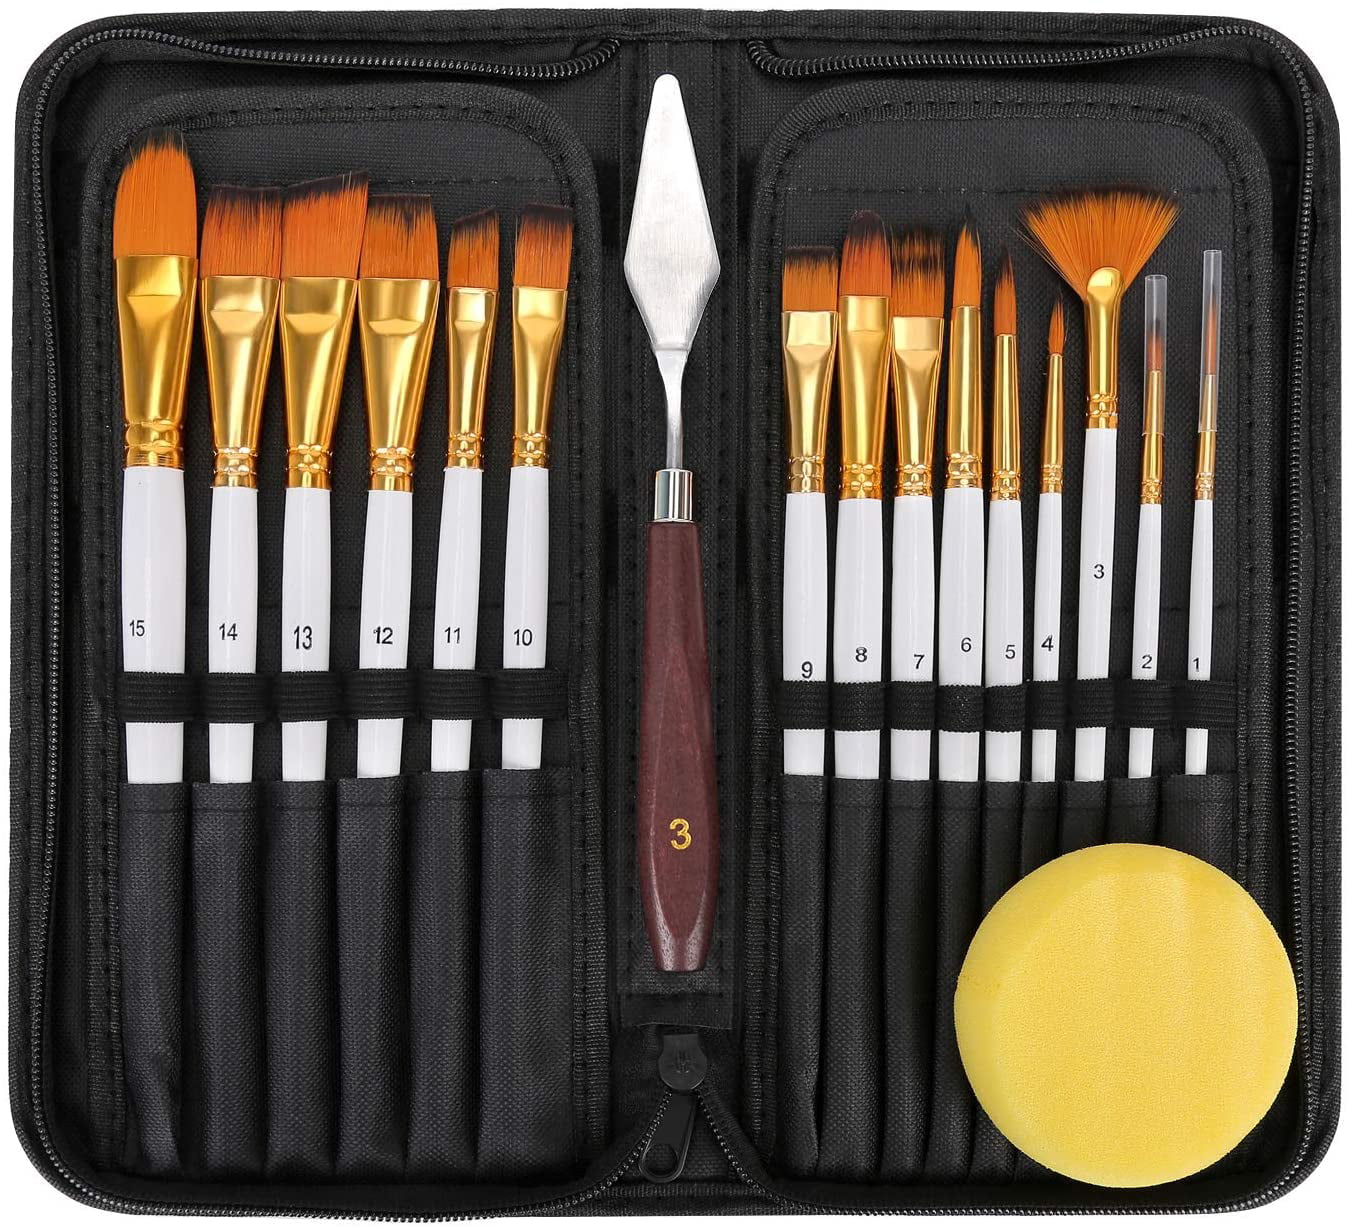 Paint Brushes Set for Acrylic Oil Painting 15Pcs Professional Canvas Paint Kit